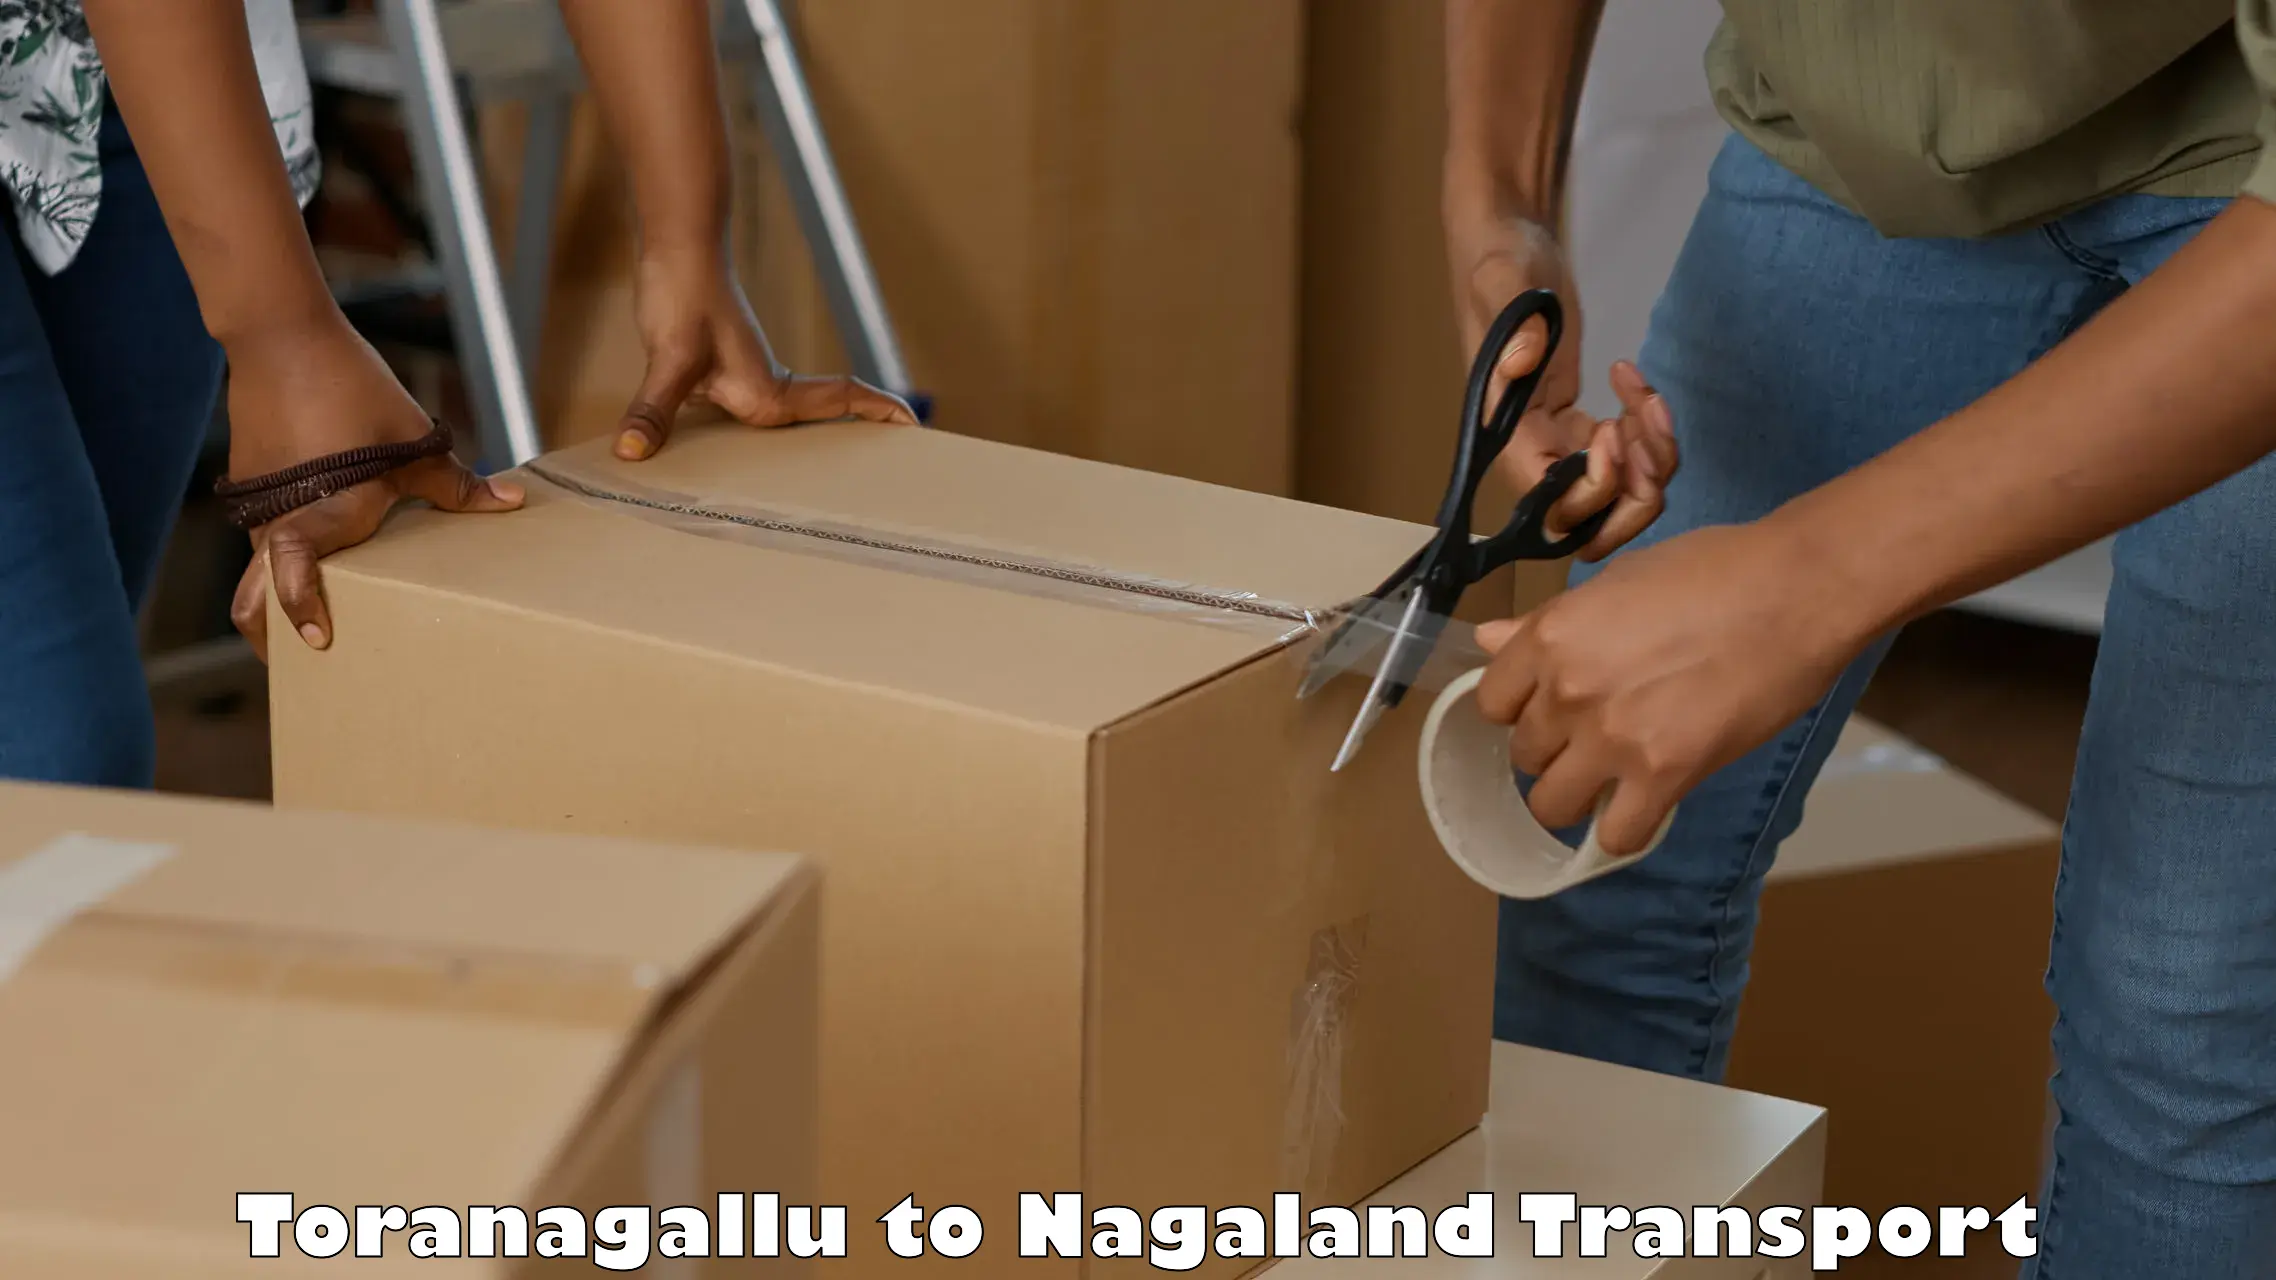 Container transport service Toranagallu to Nagaland